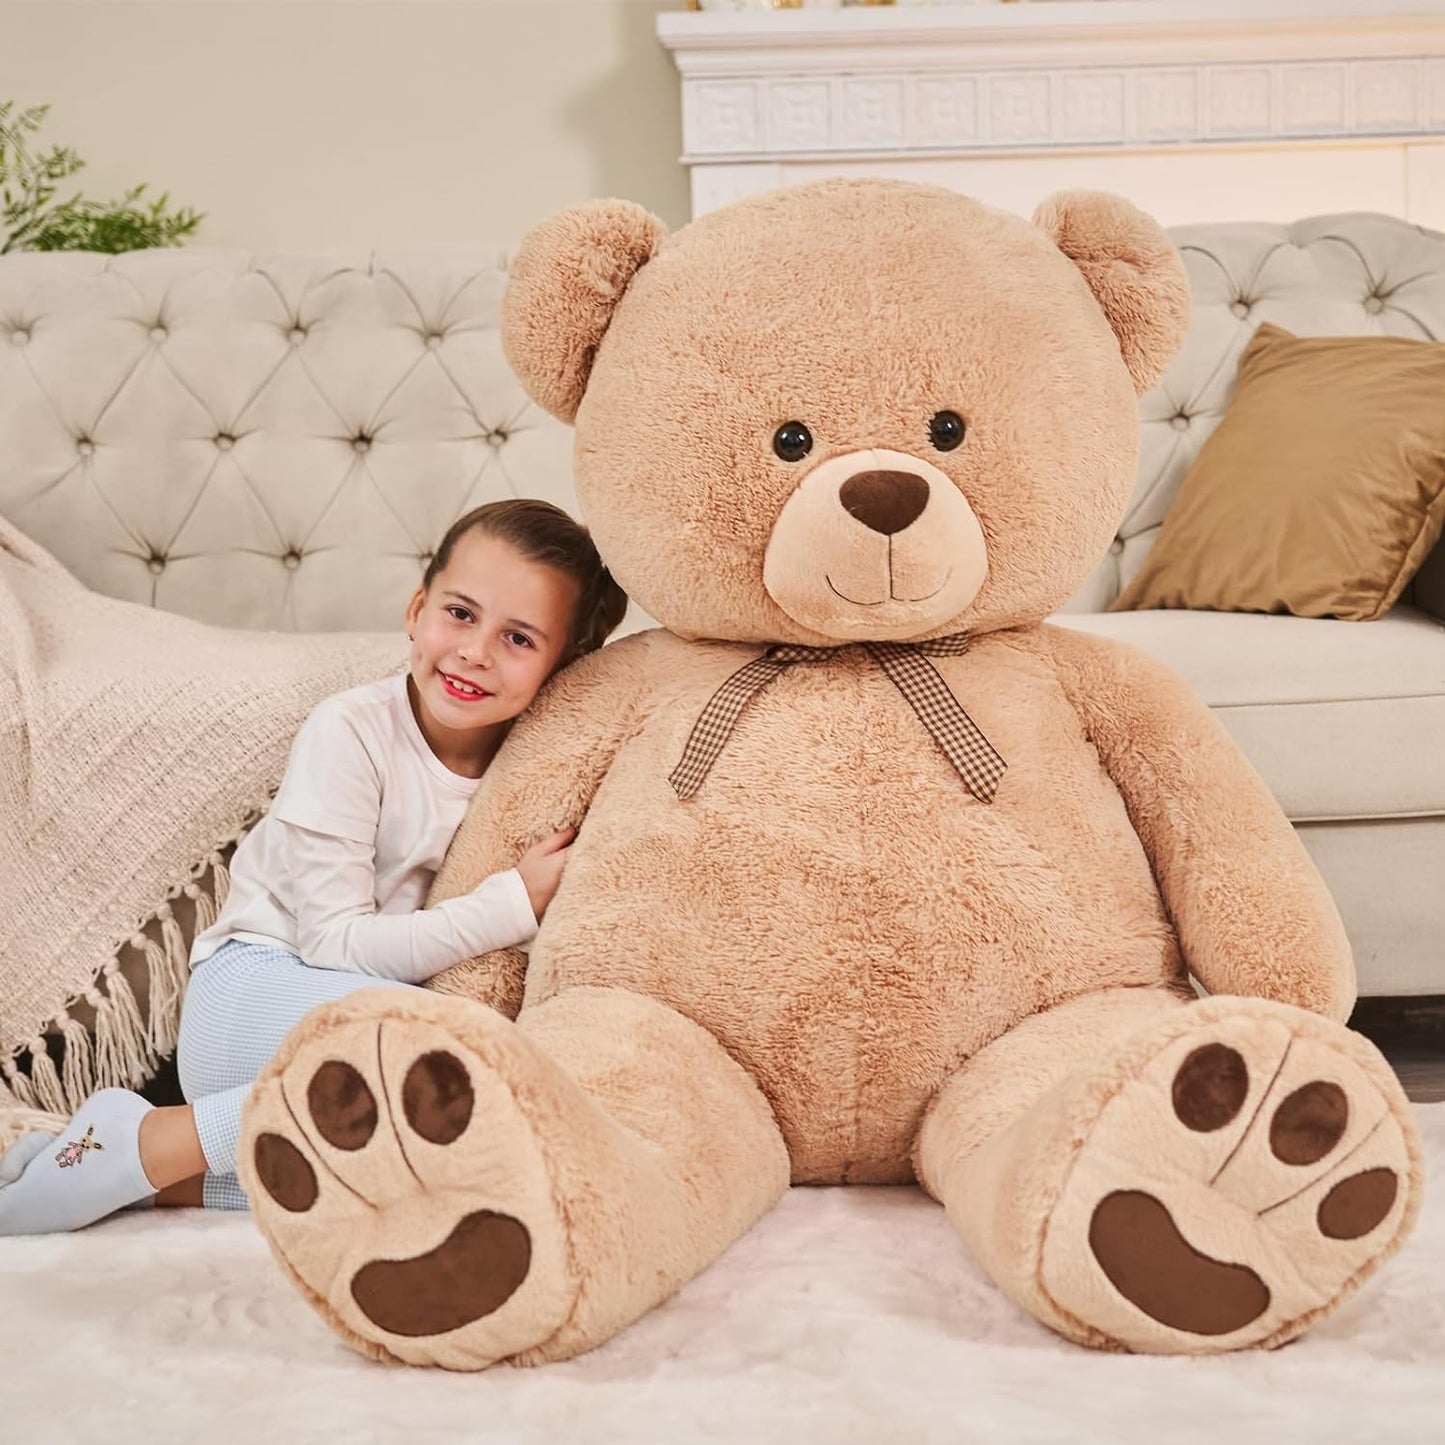 Giant Teddy Bear Plush Toy, Light Brown, 43/55 Inches - MorisMos Stuffed Animals